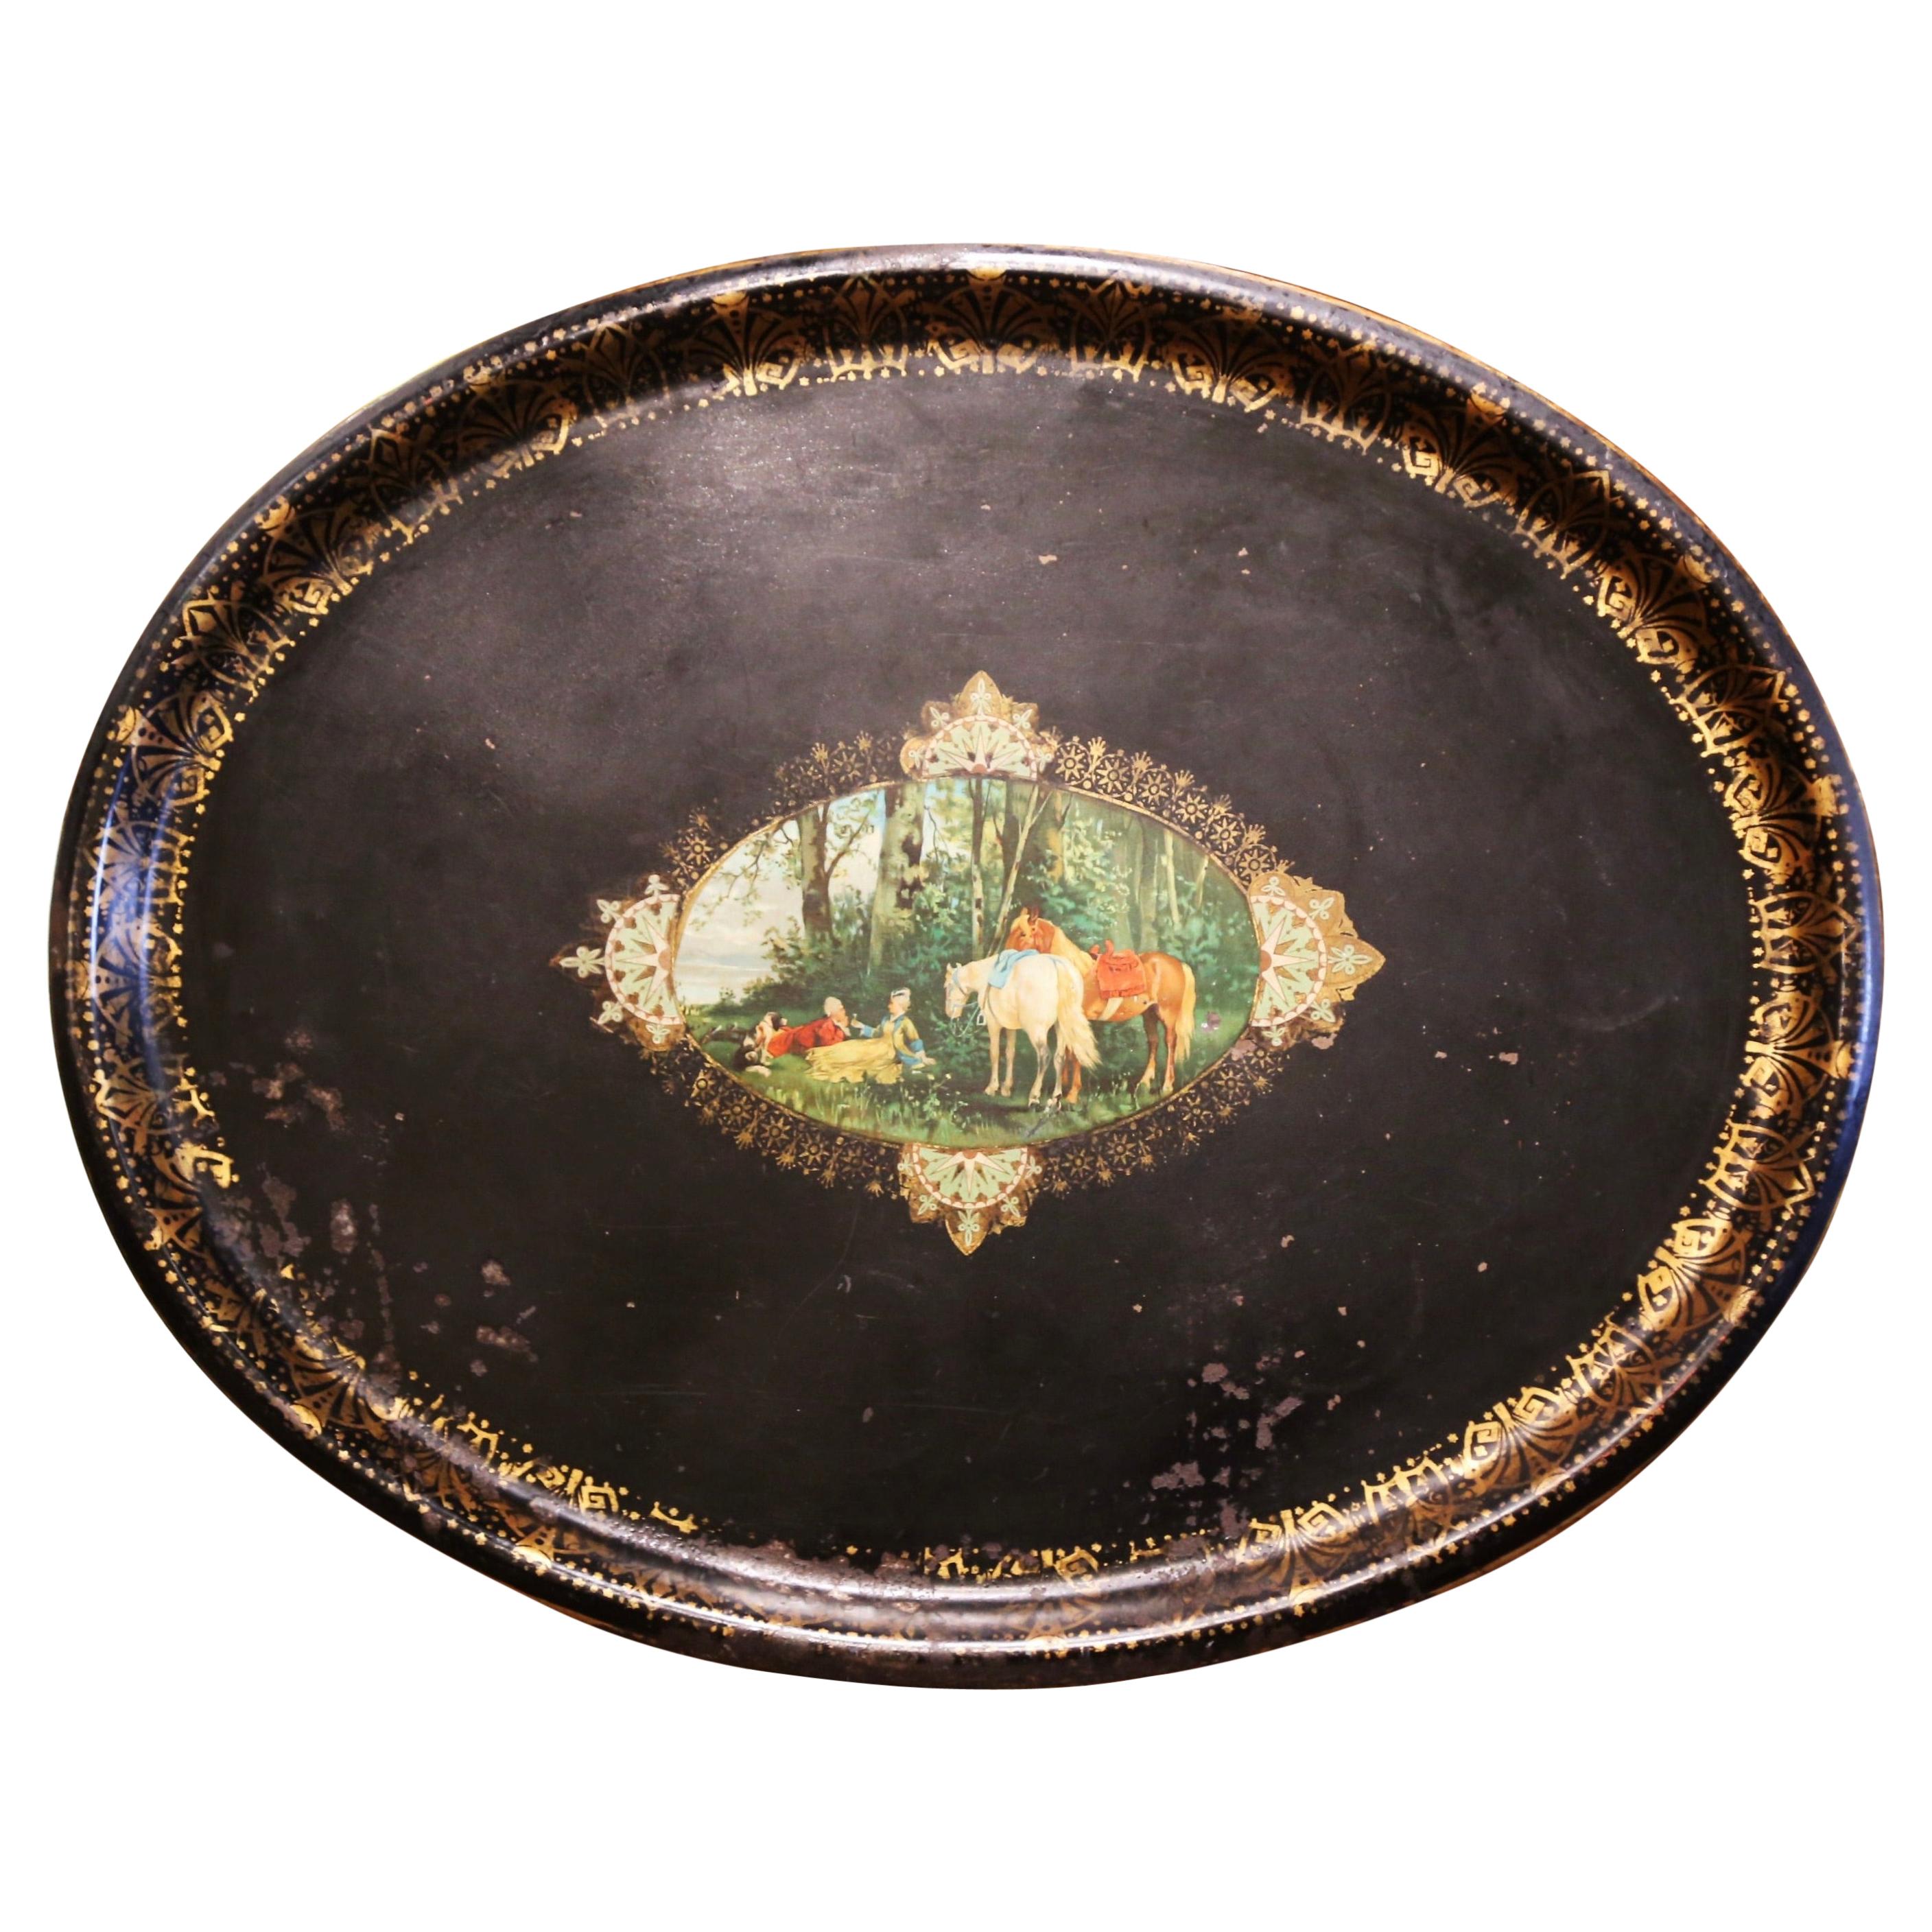 Französisches Napoleon III.-Tablett des 19. Jahrhunderts mit ovalem Zinntablett und handbemalter Medaillon